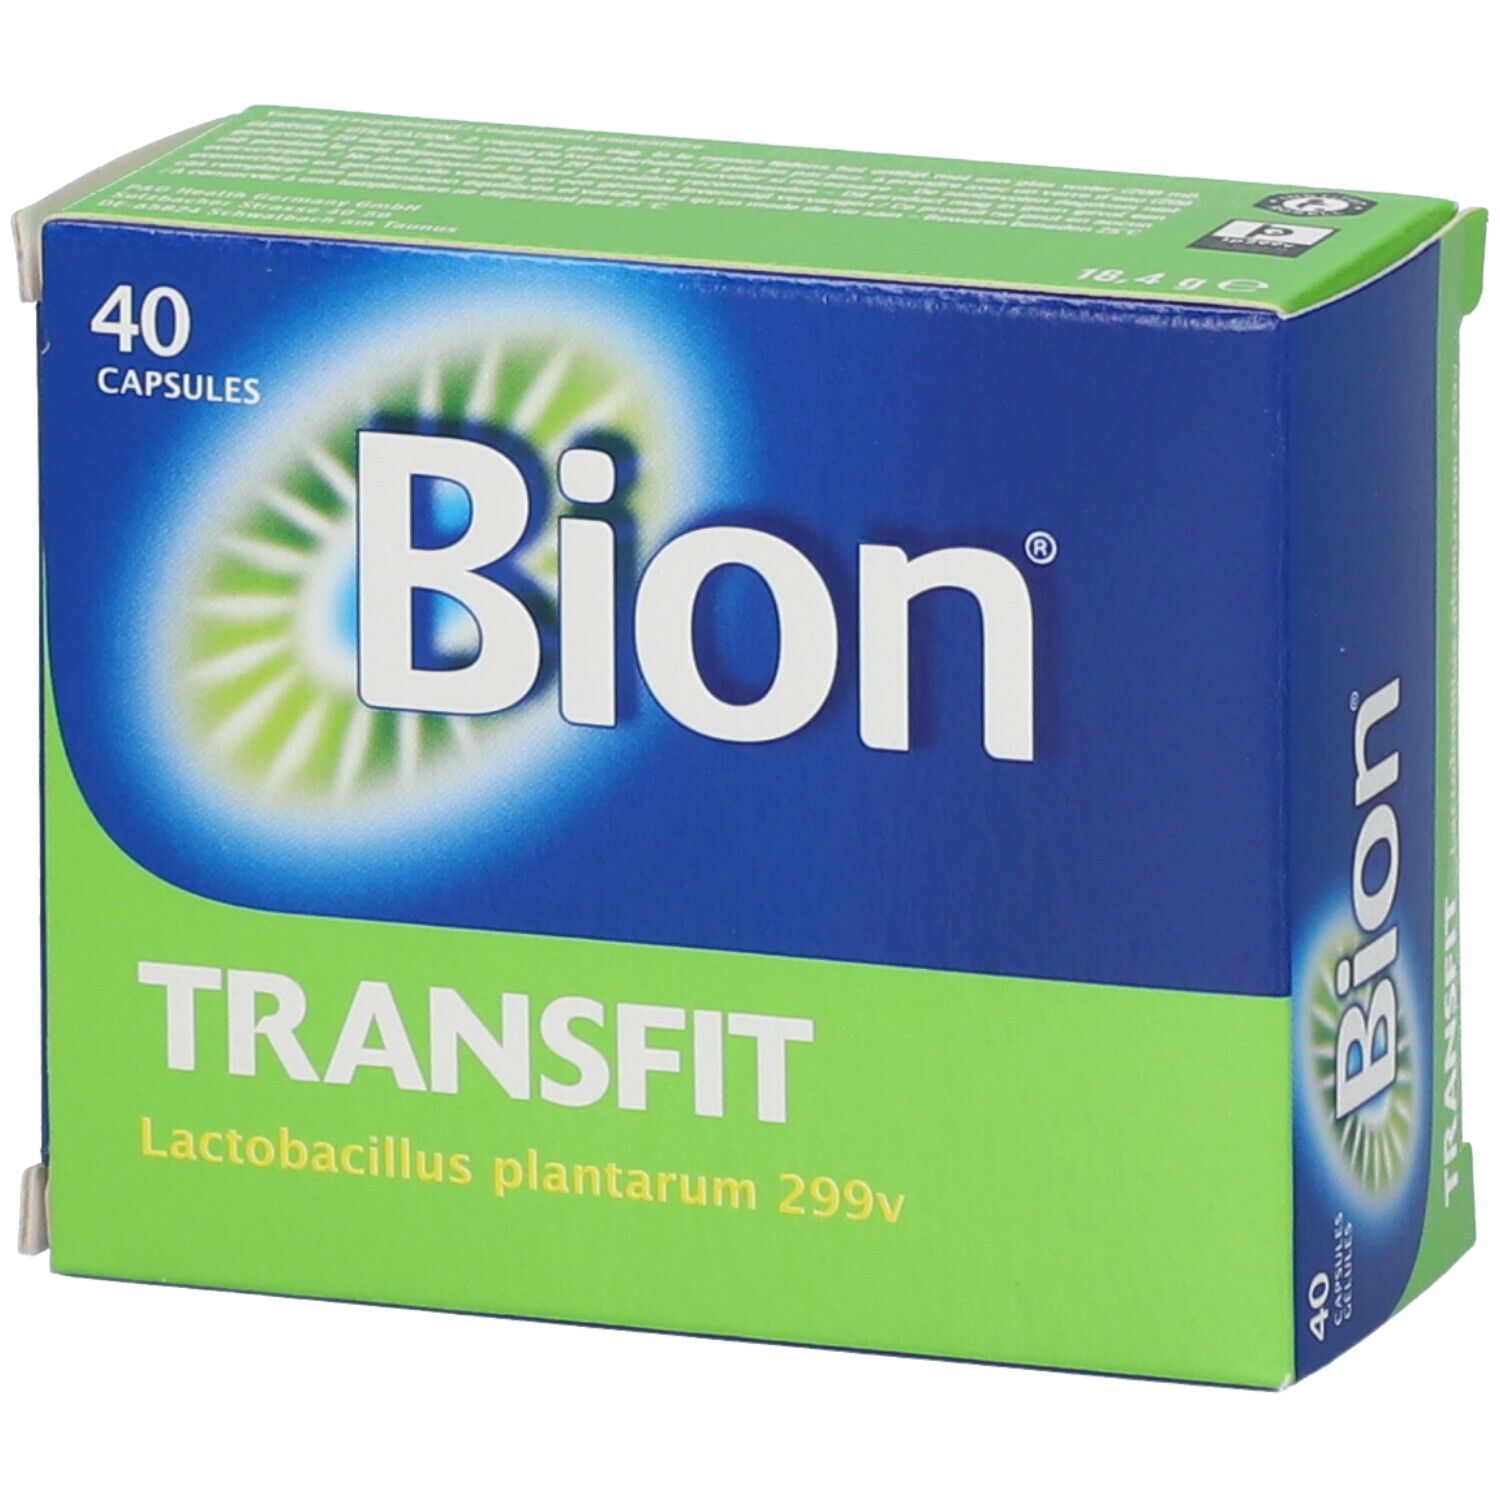 Image of Bion® Transfit